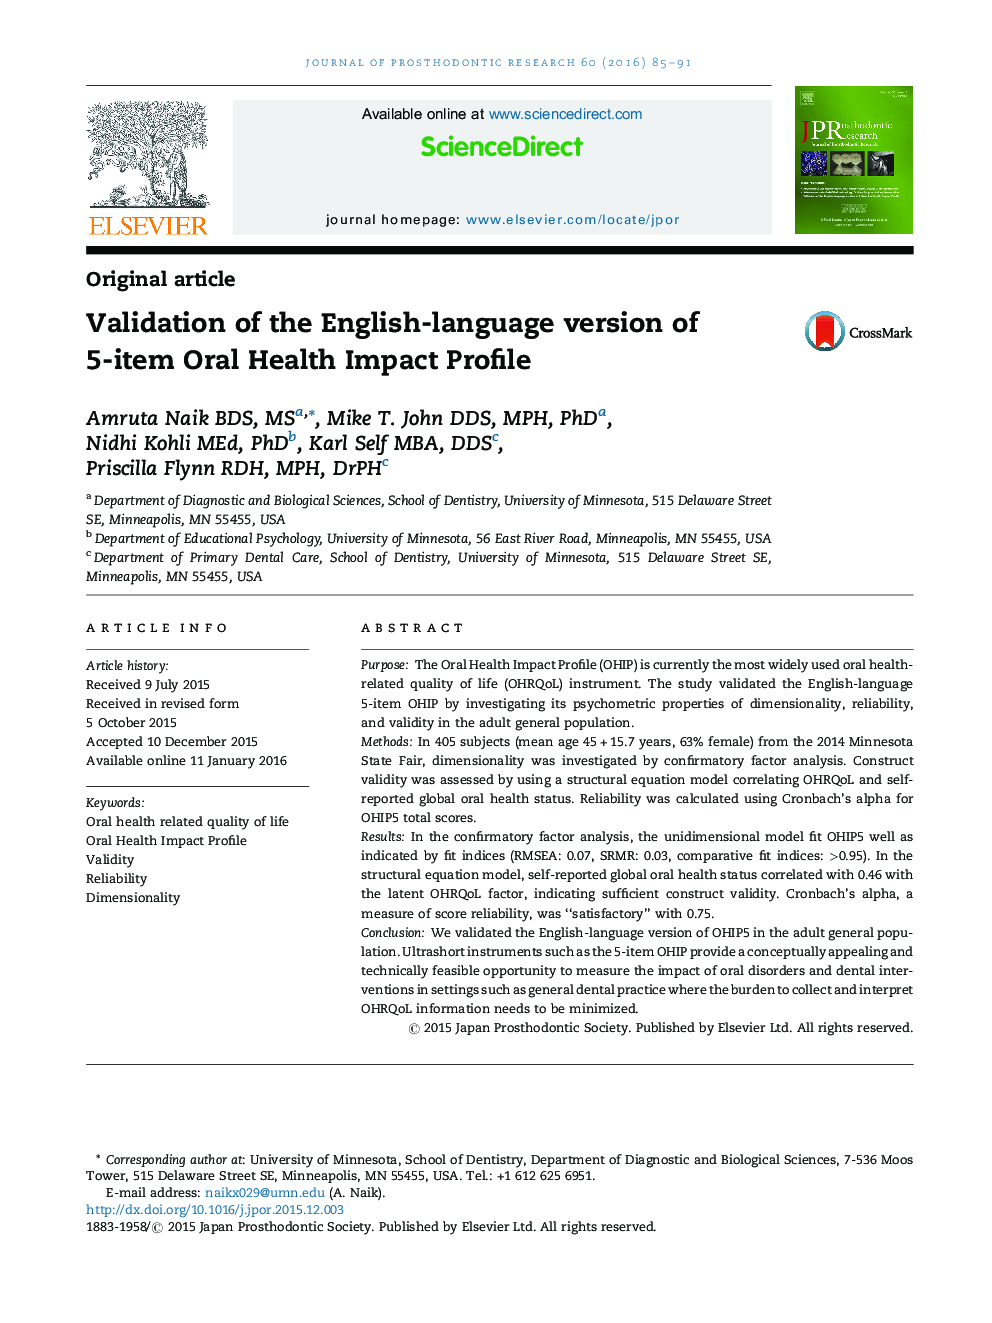 Validation of the English-language version of 5-item Oral Health Impact Profile